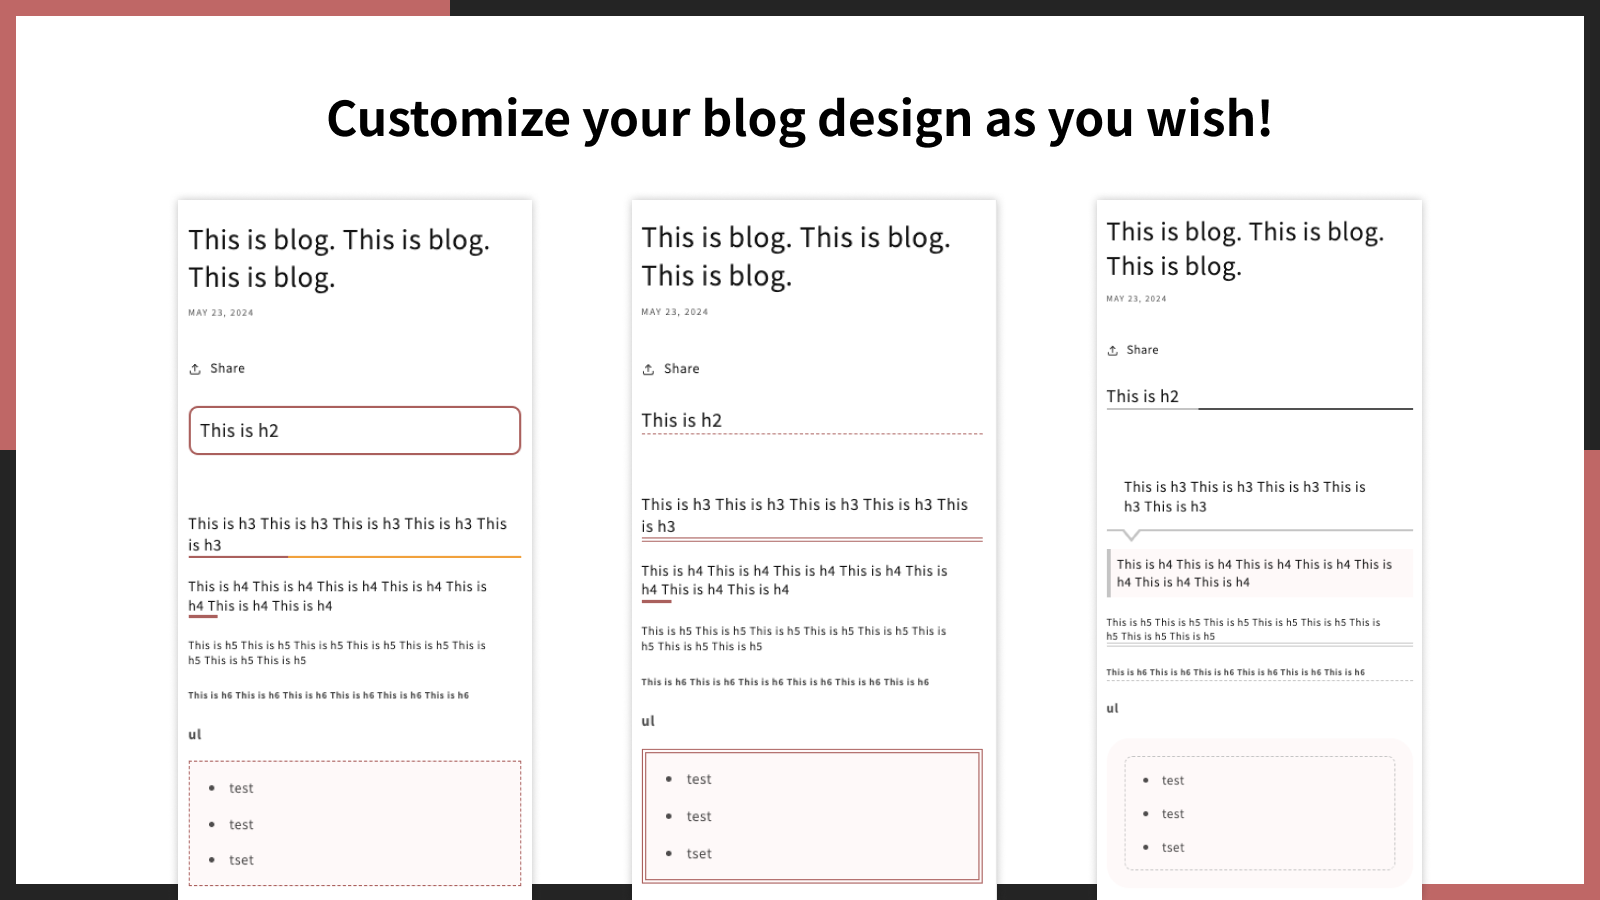 Customize your blog design as you wish.